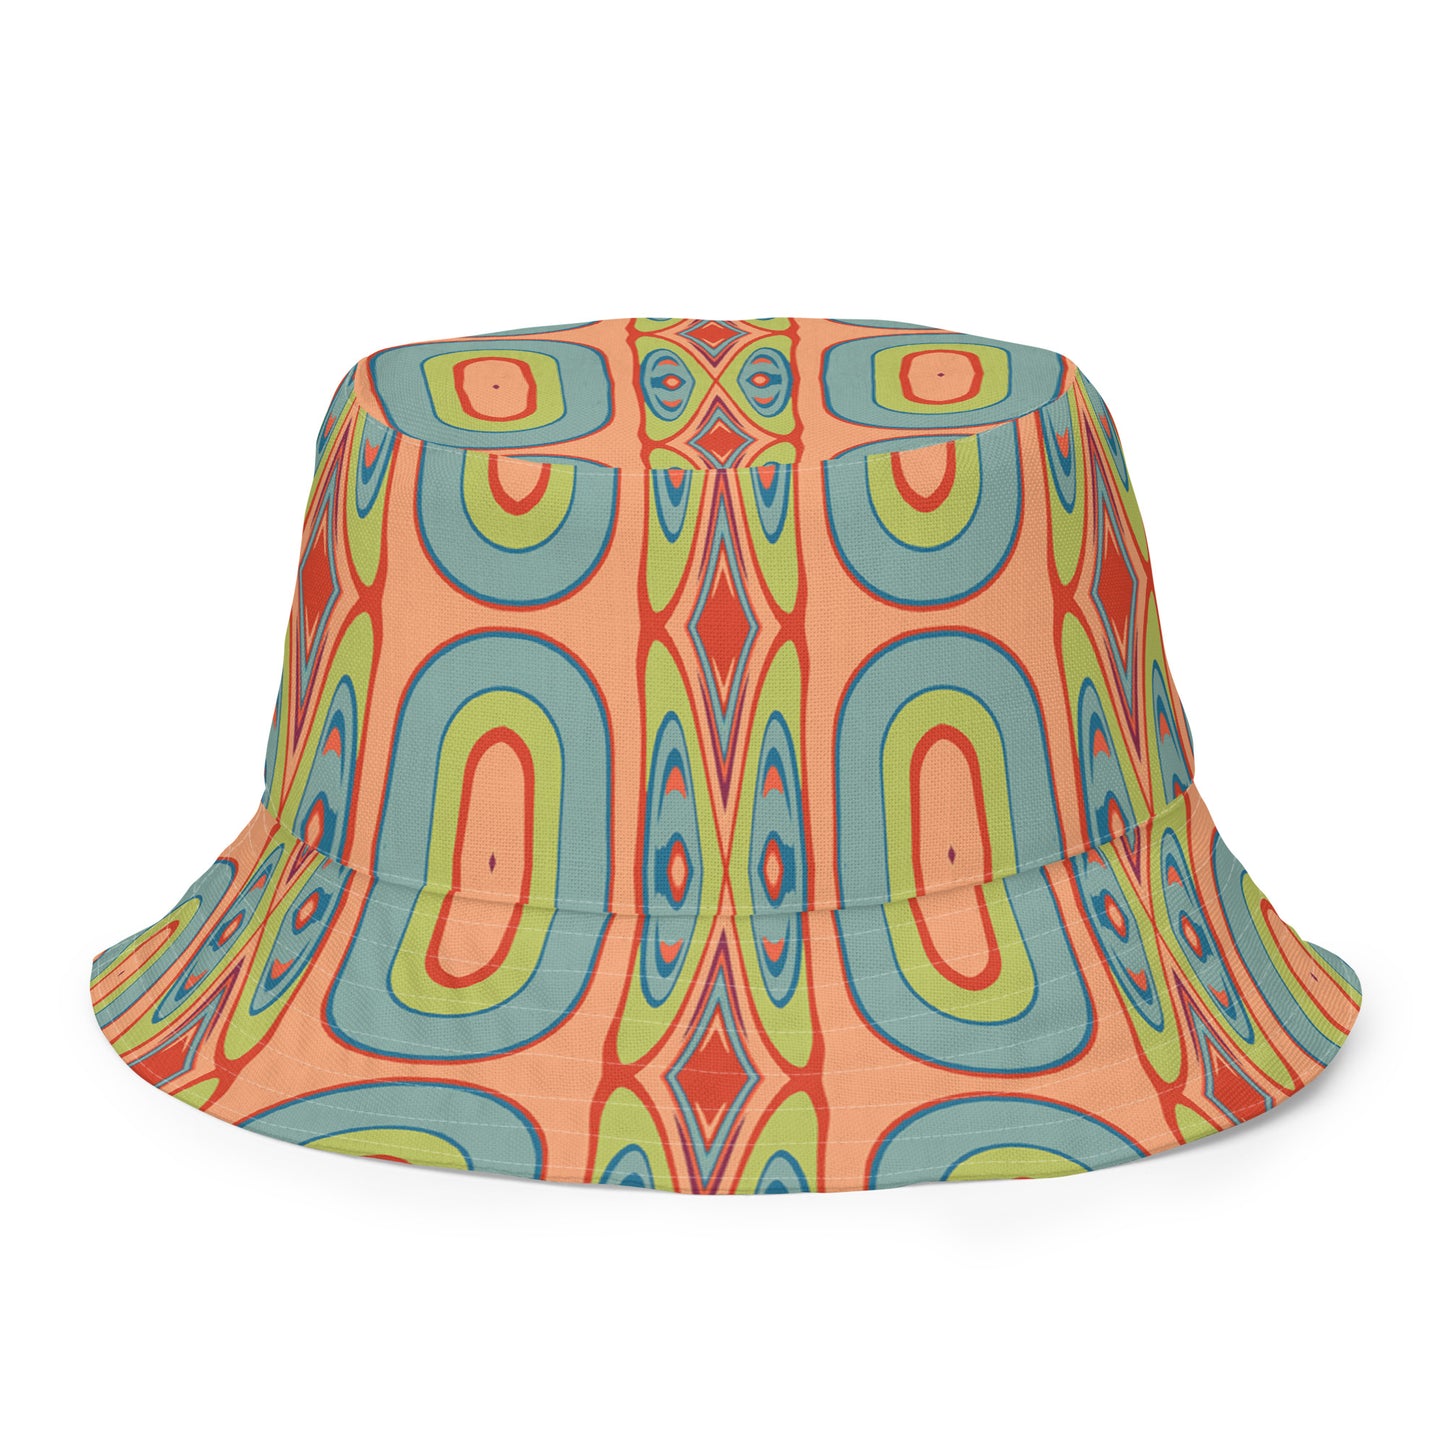 70's Style Reversible bucket hat